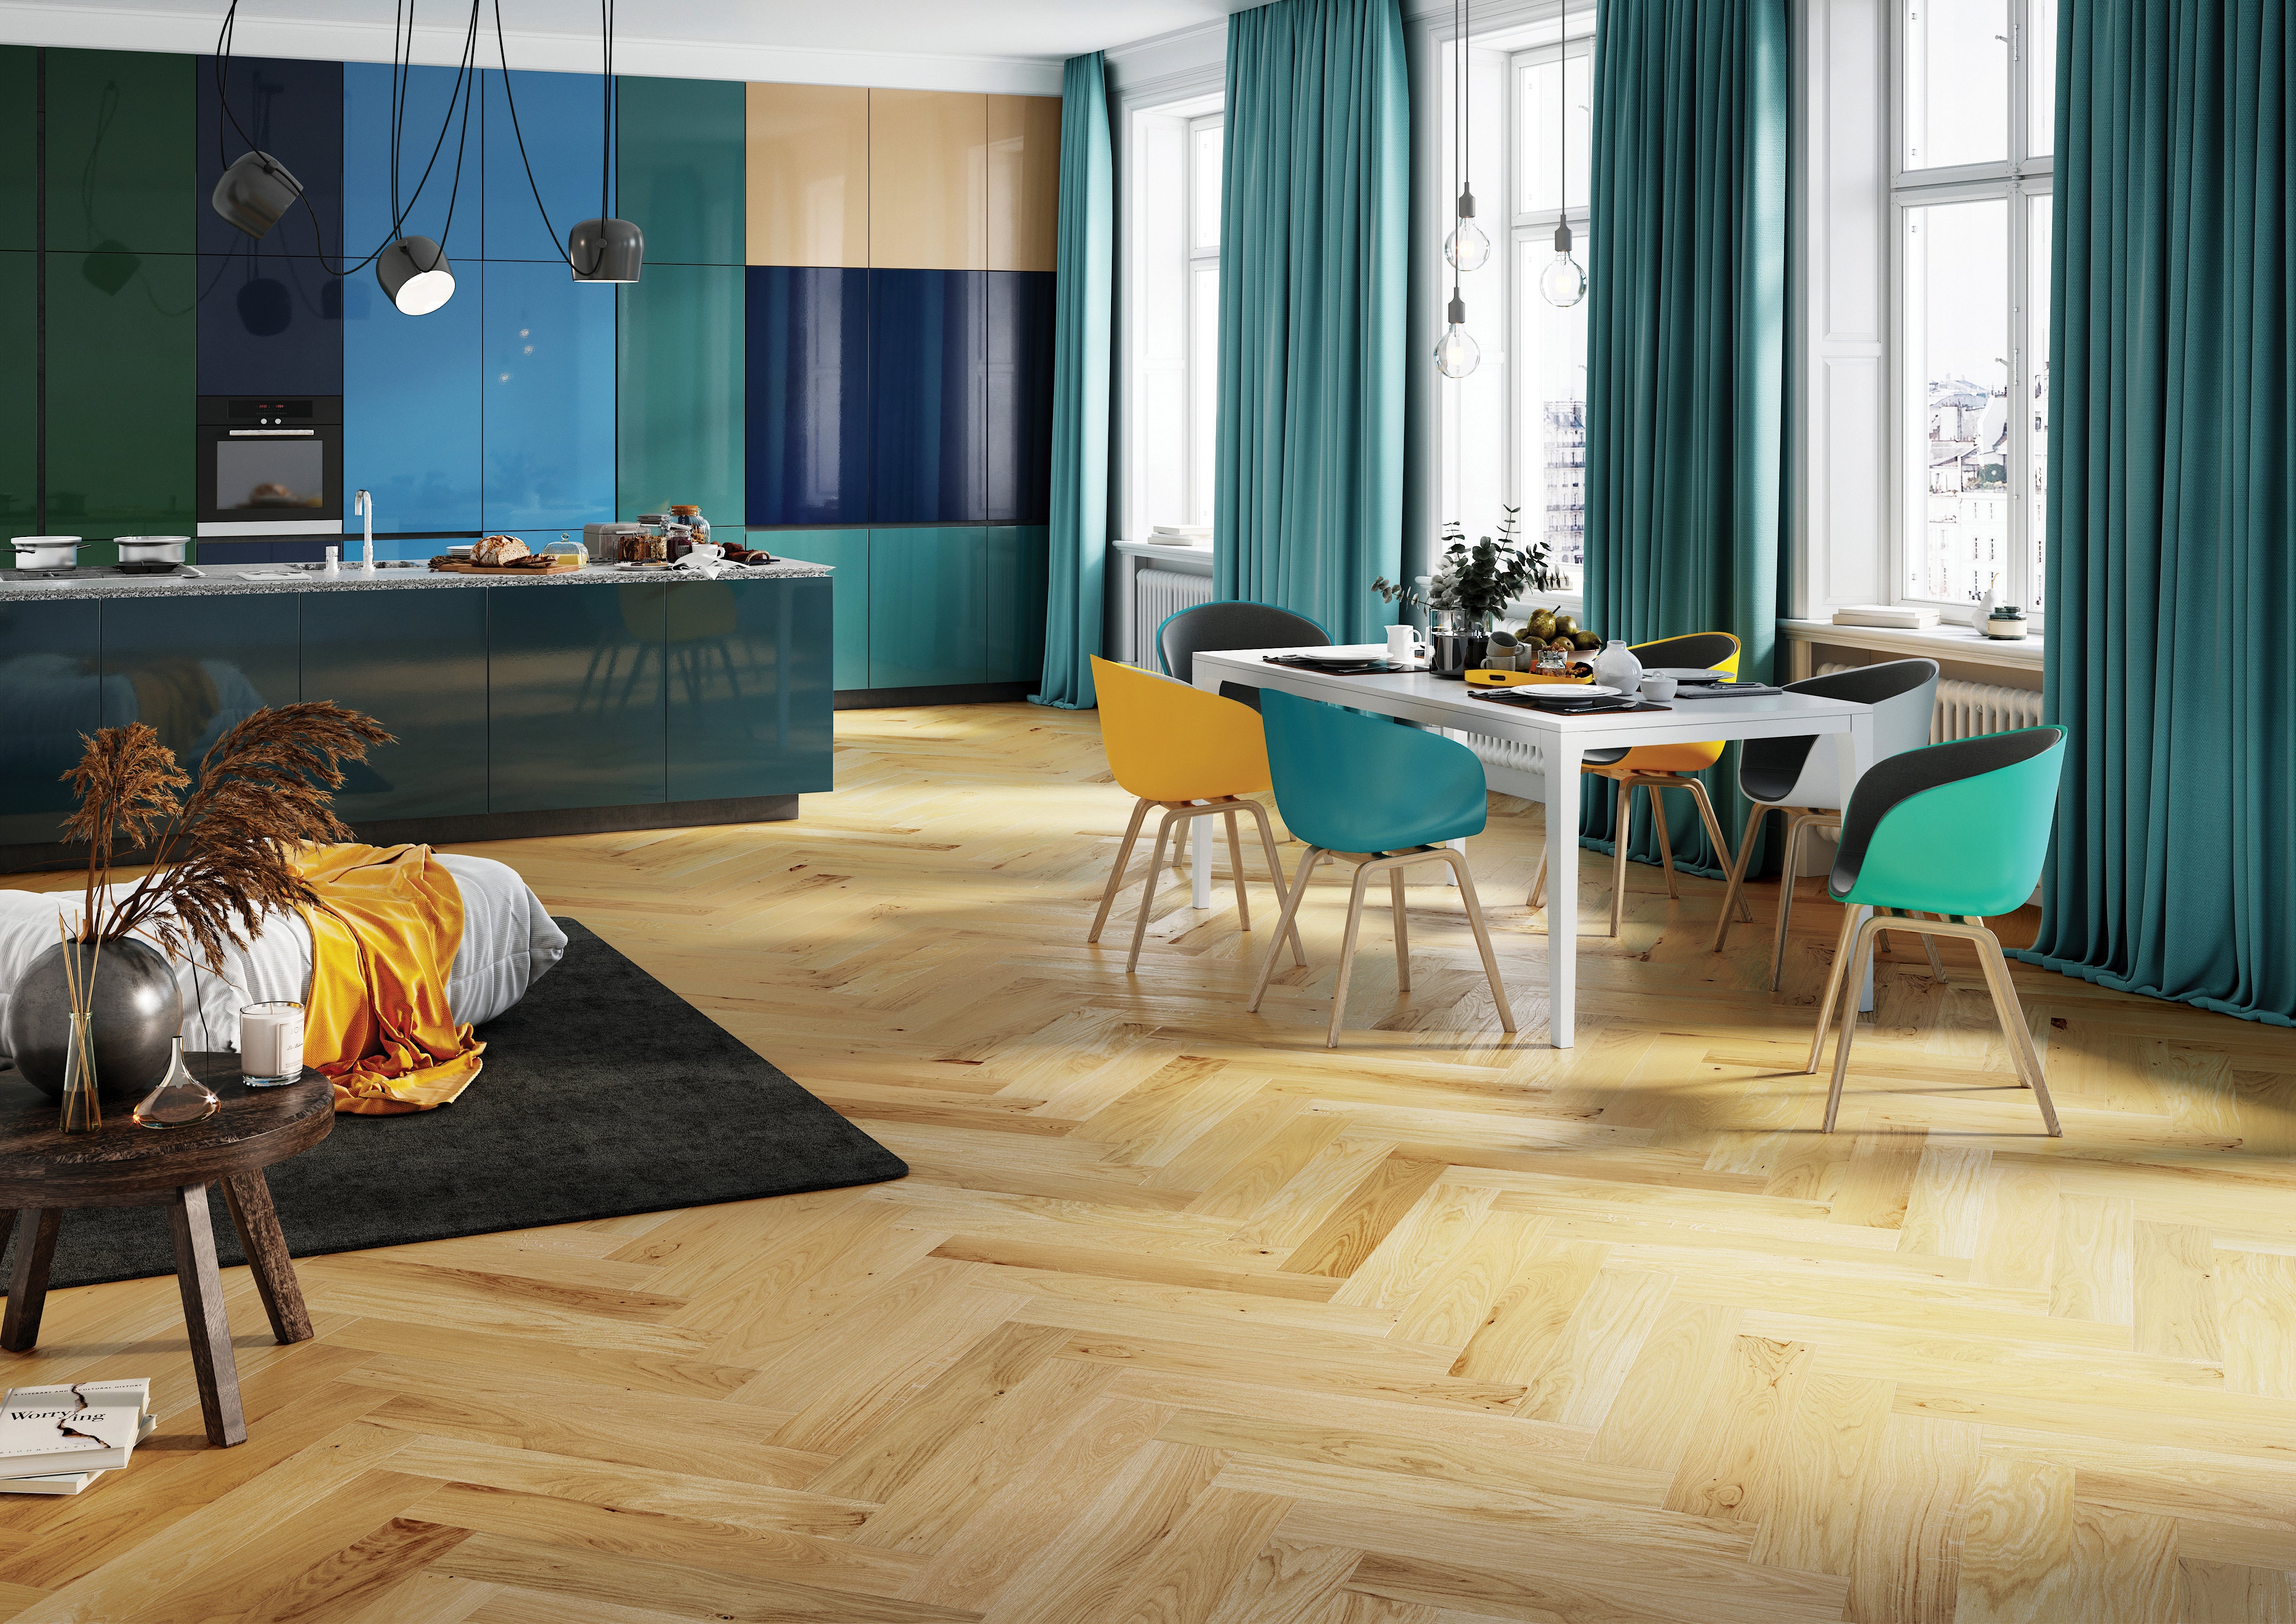 quality natural wood flooring laid in herringbone pattern